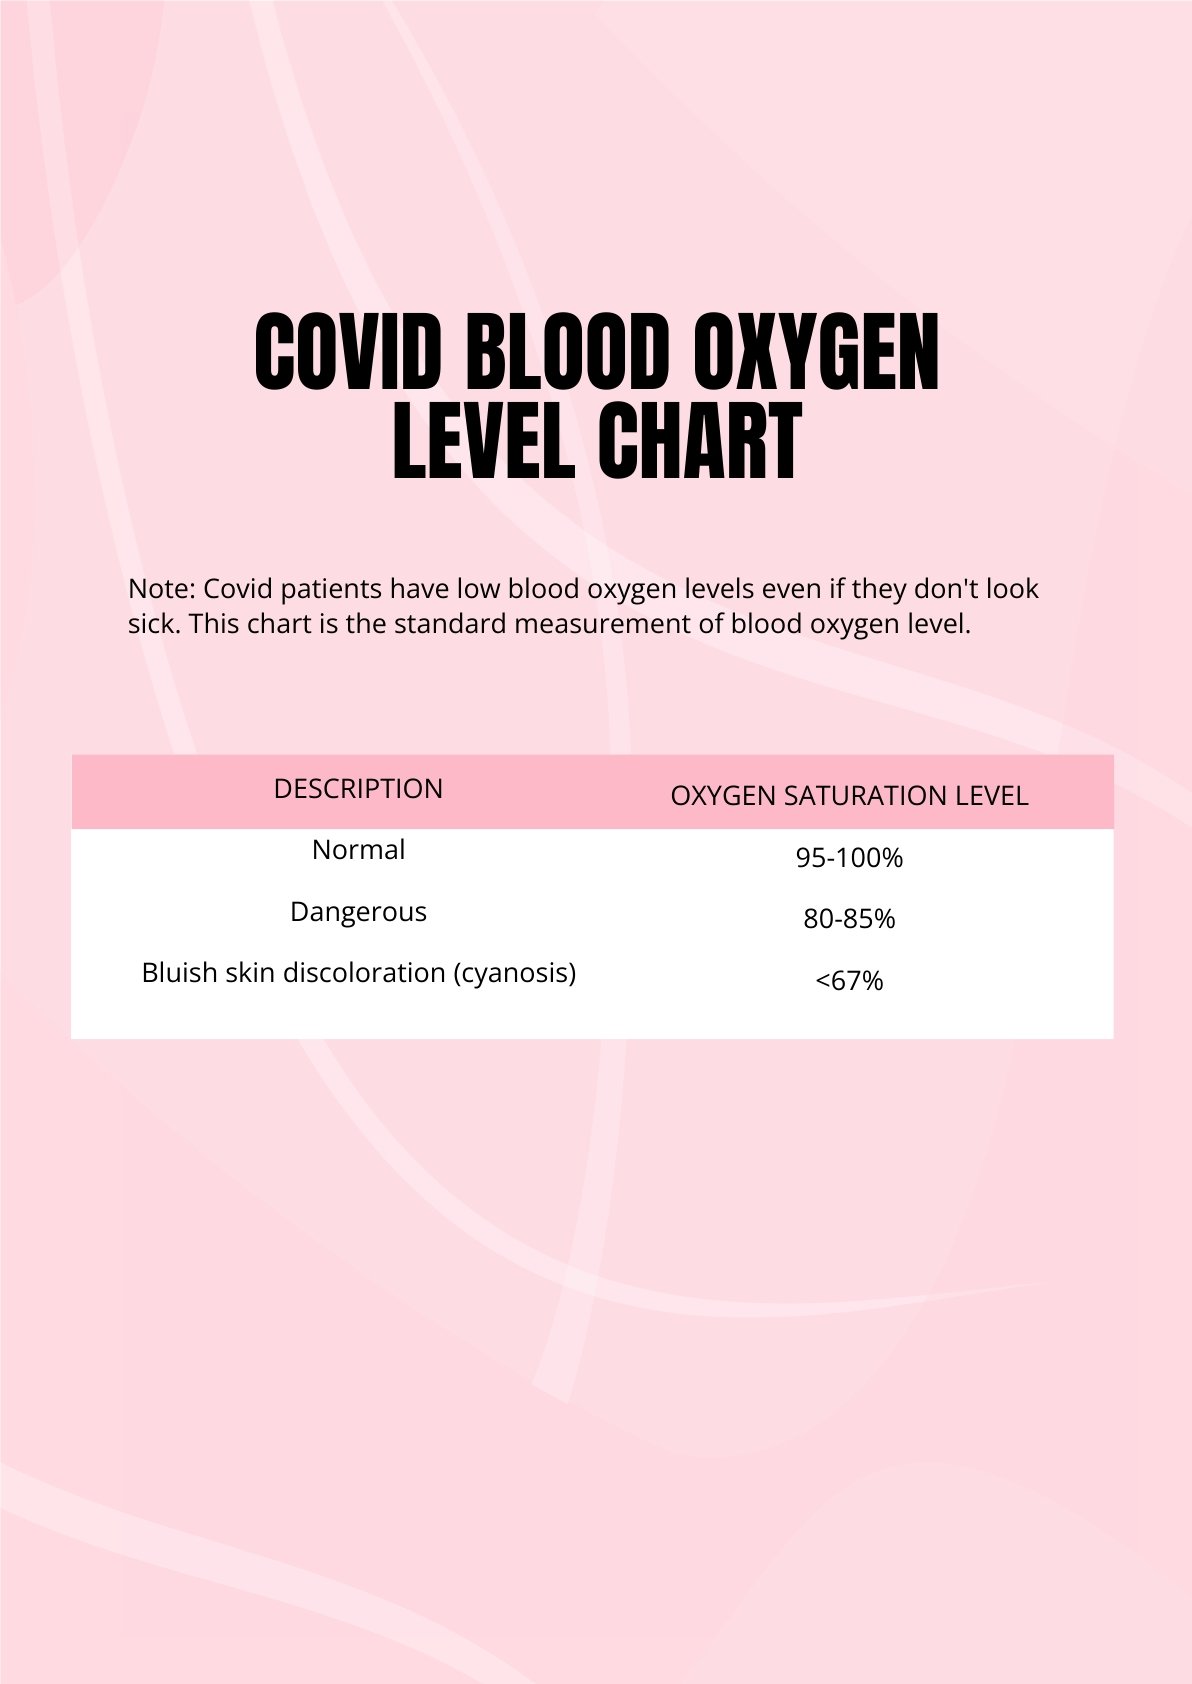 Covid Blood Oxygen Level Chart in PDF